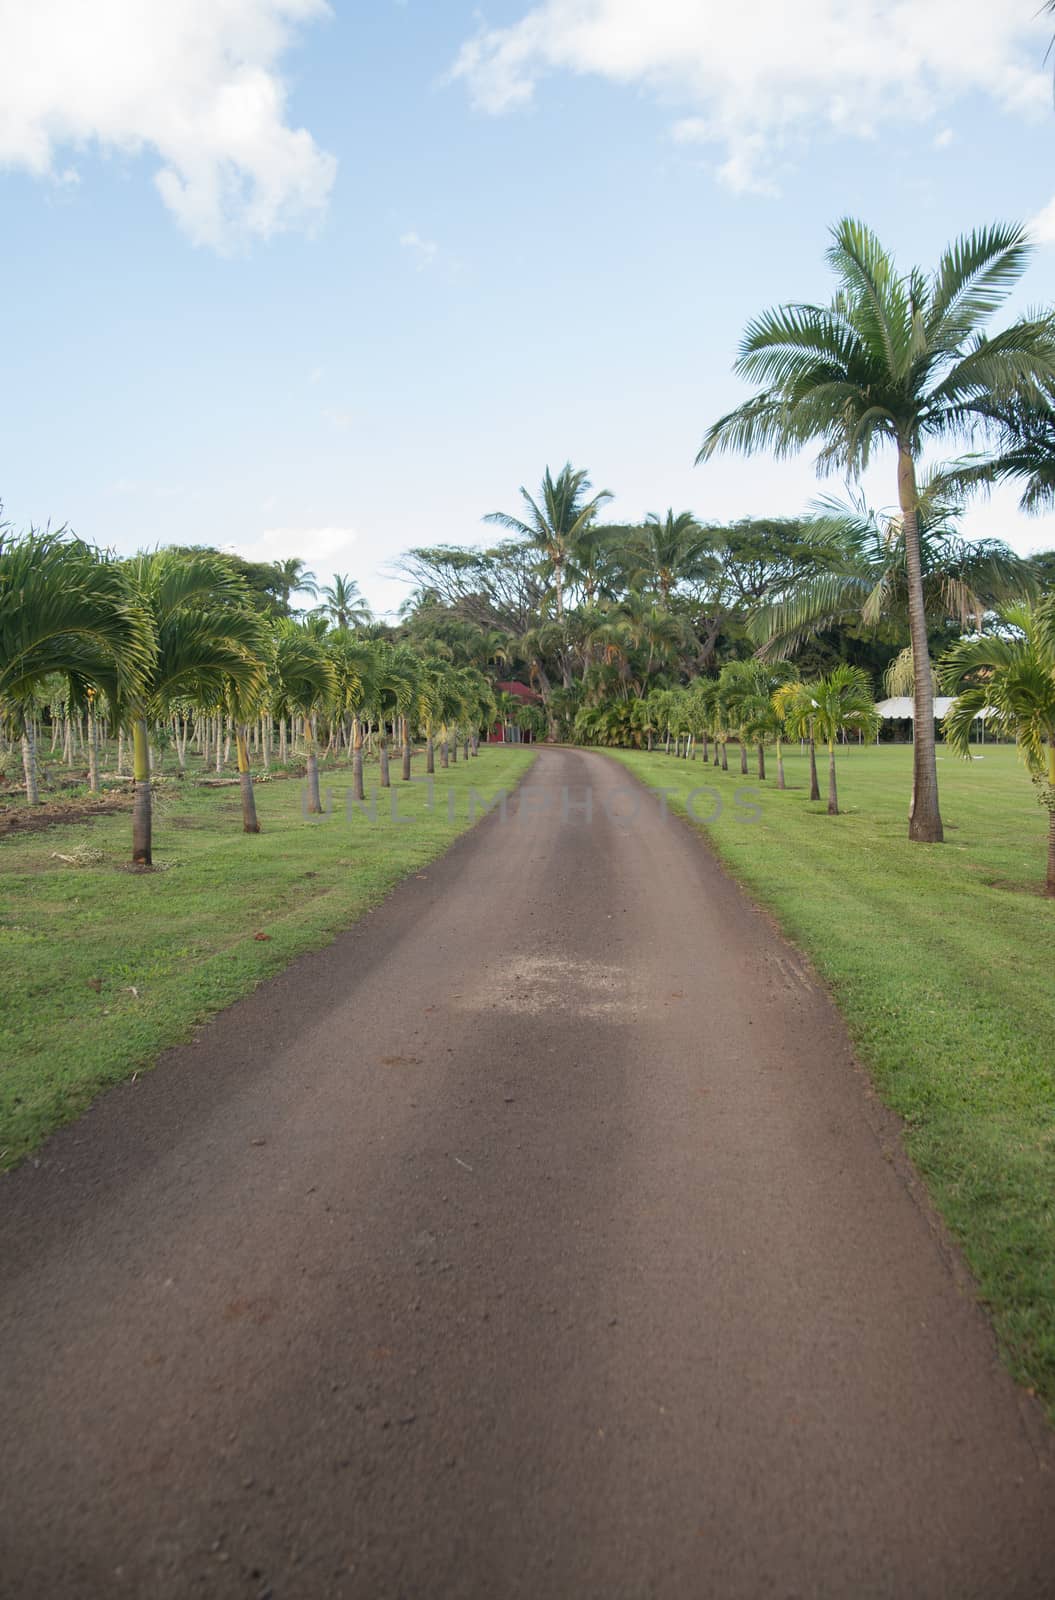 Scenic plants and trees in tropical Hawaiian plantation